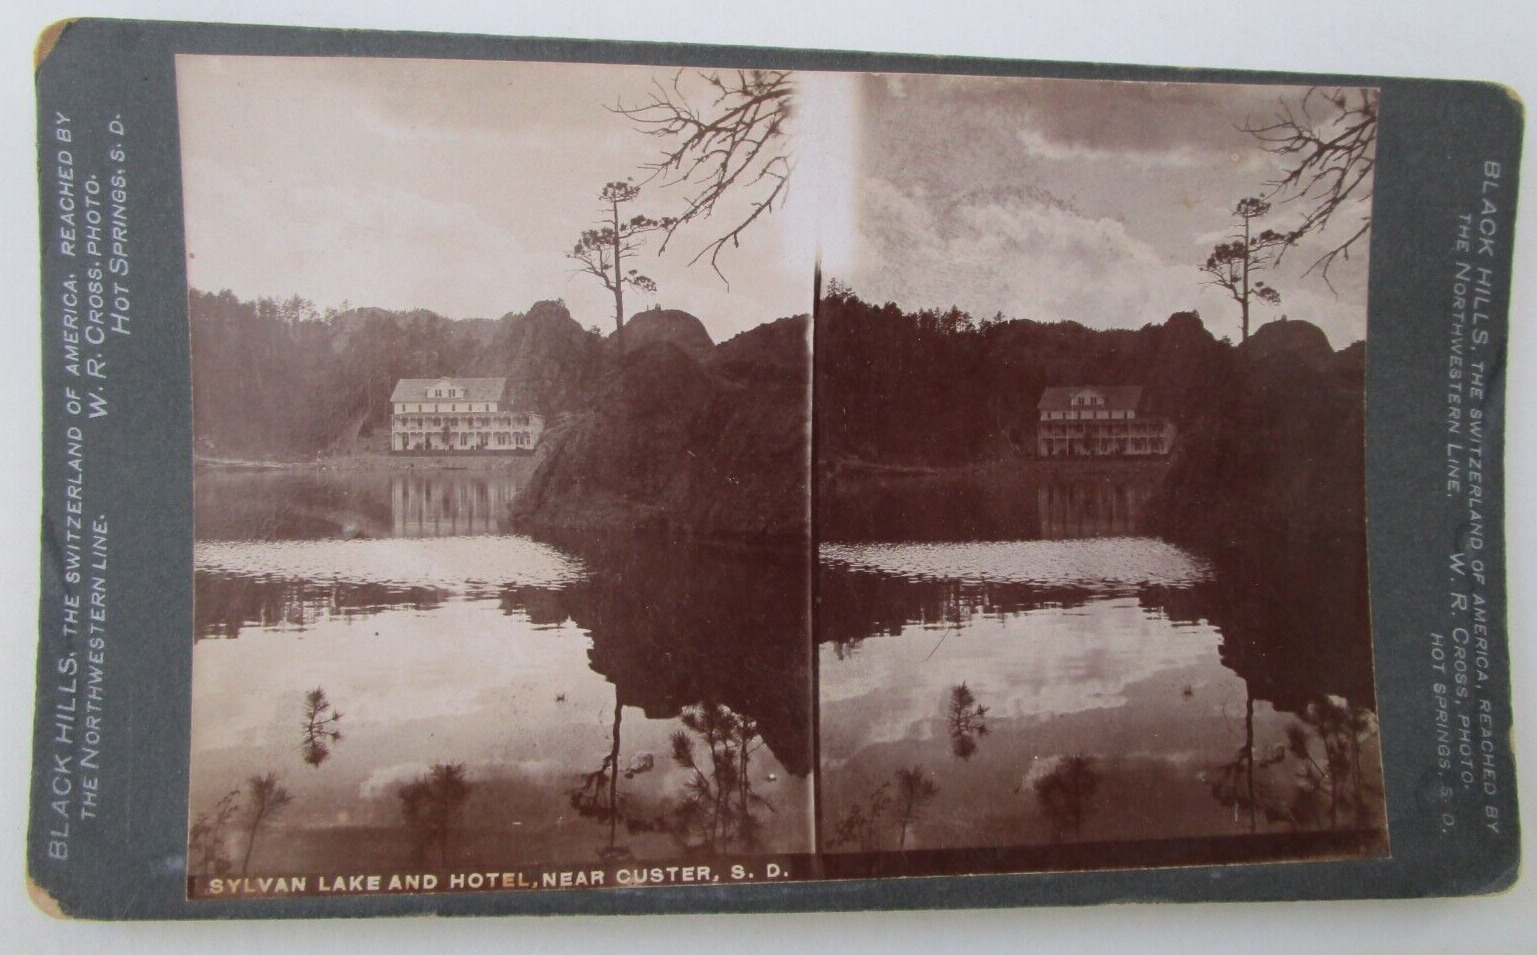 SYLVAN LAKE & HOTEL, NEAR CUSTER, S.D. - Oversize Stereoview - W.R. Cross